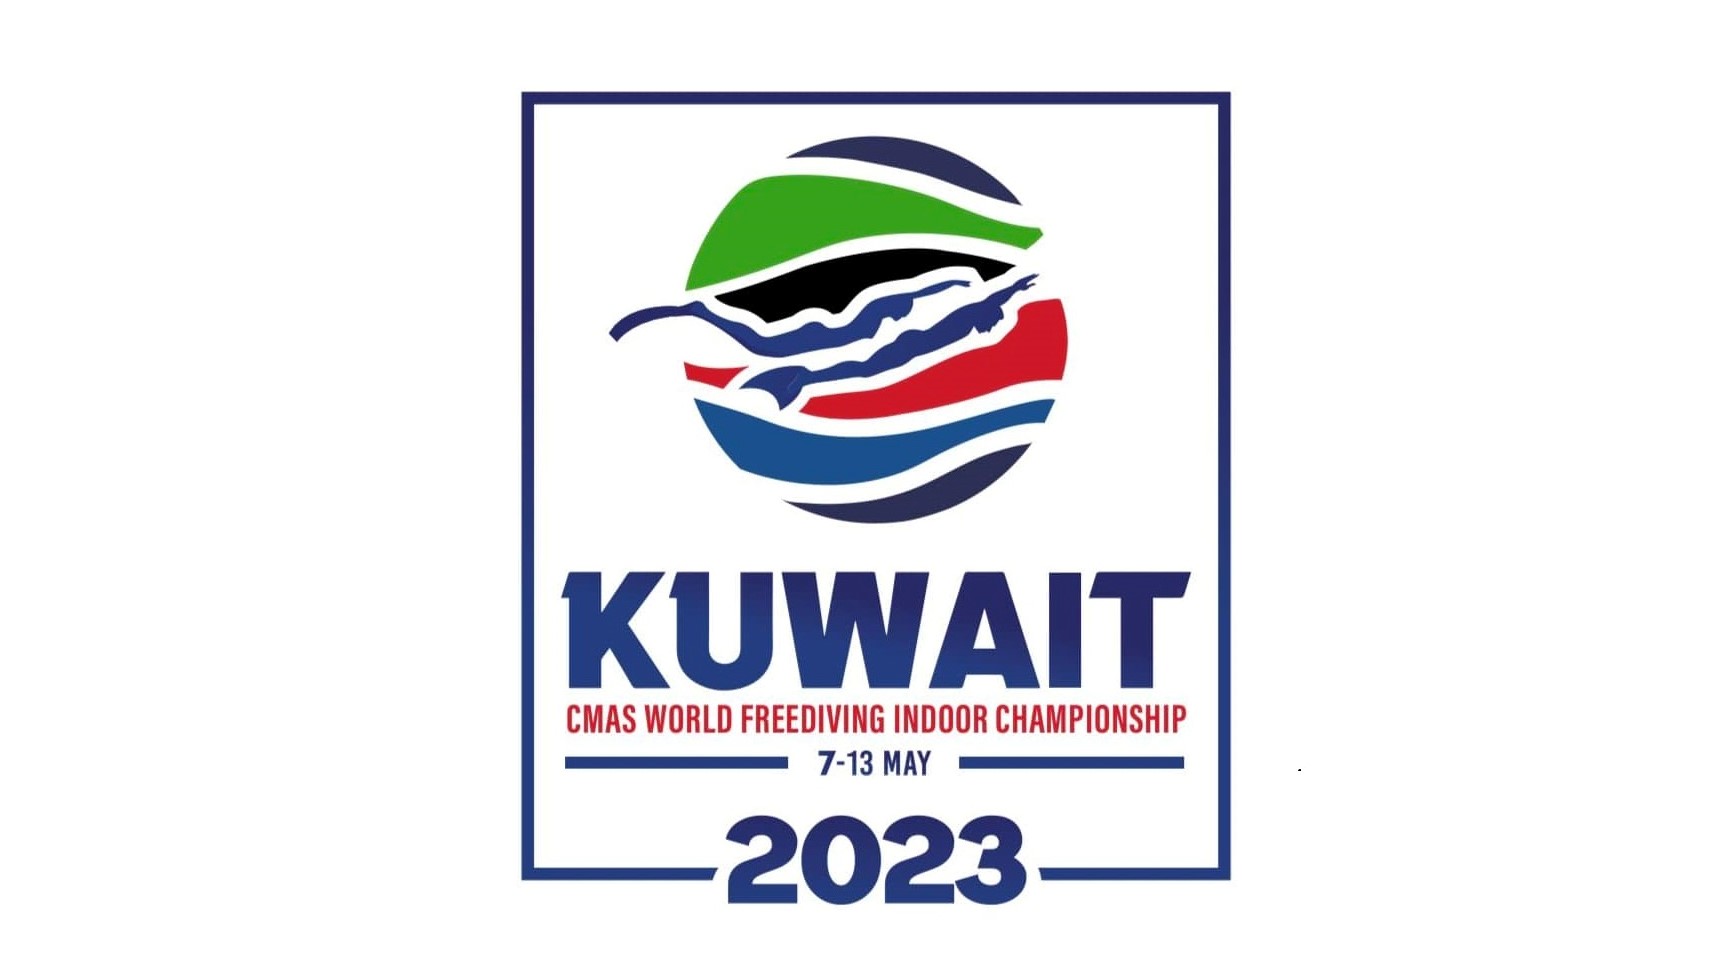 Kuwejt logo 2